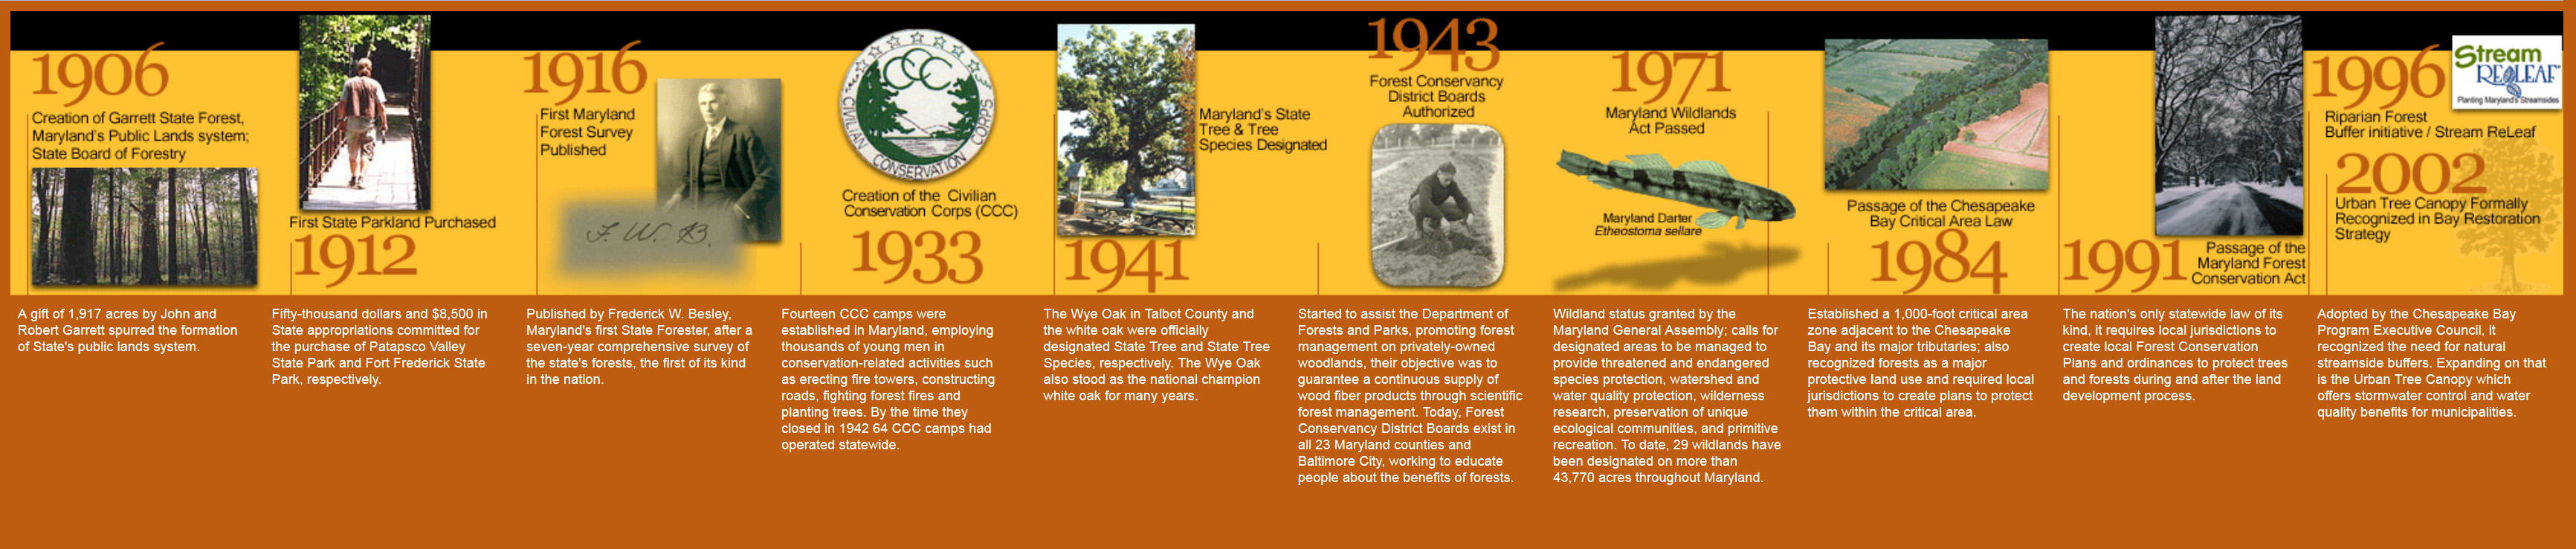 Maryland State Forestry & Parks Centennial Celebration Timeline